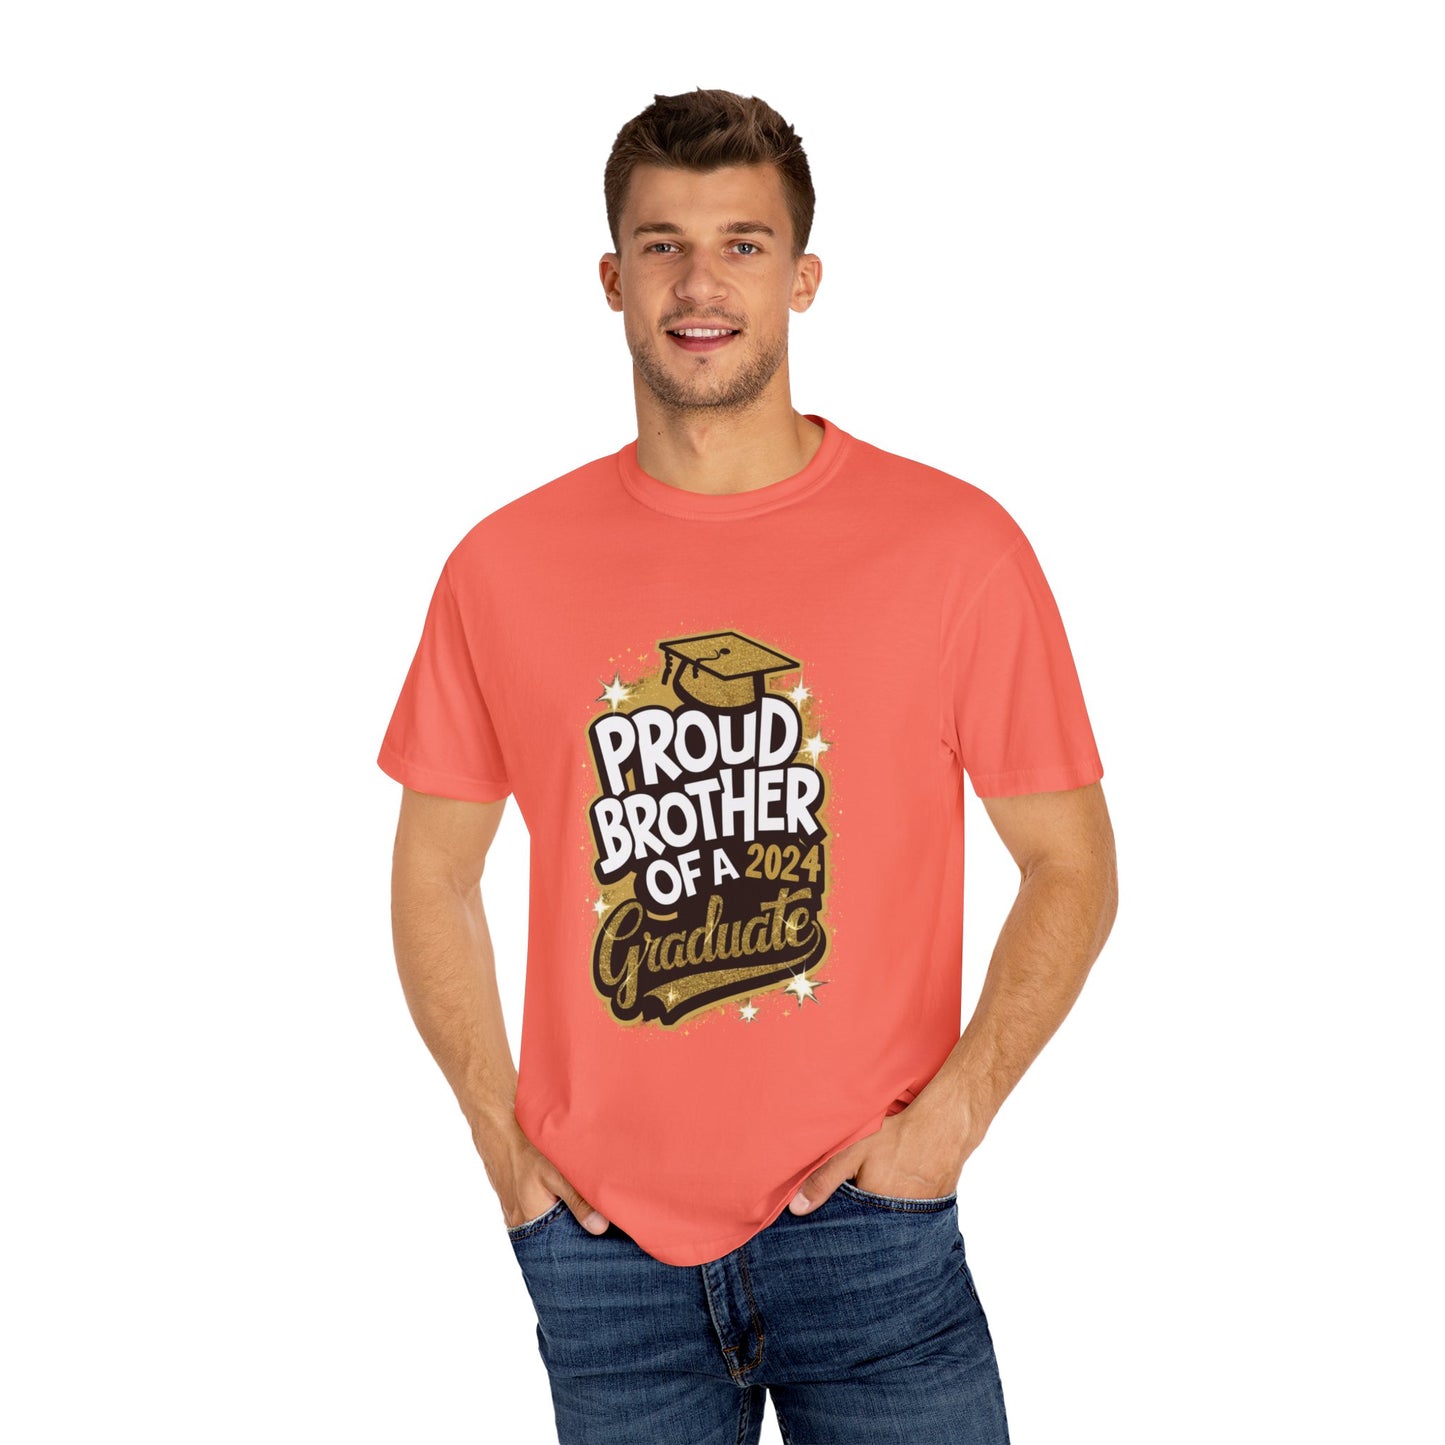 Proud Brother of a 2024 Graduate Unisex Garment-dyed T-shirt Cotton Funny Humorous Graphic Soft Premium Unisex Men Women Bright Salmon T-shirt Birthday Gift-33